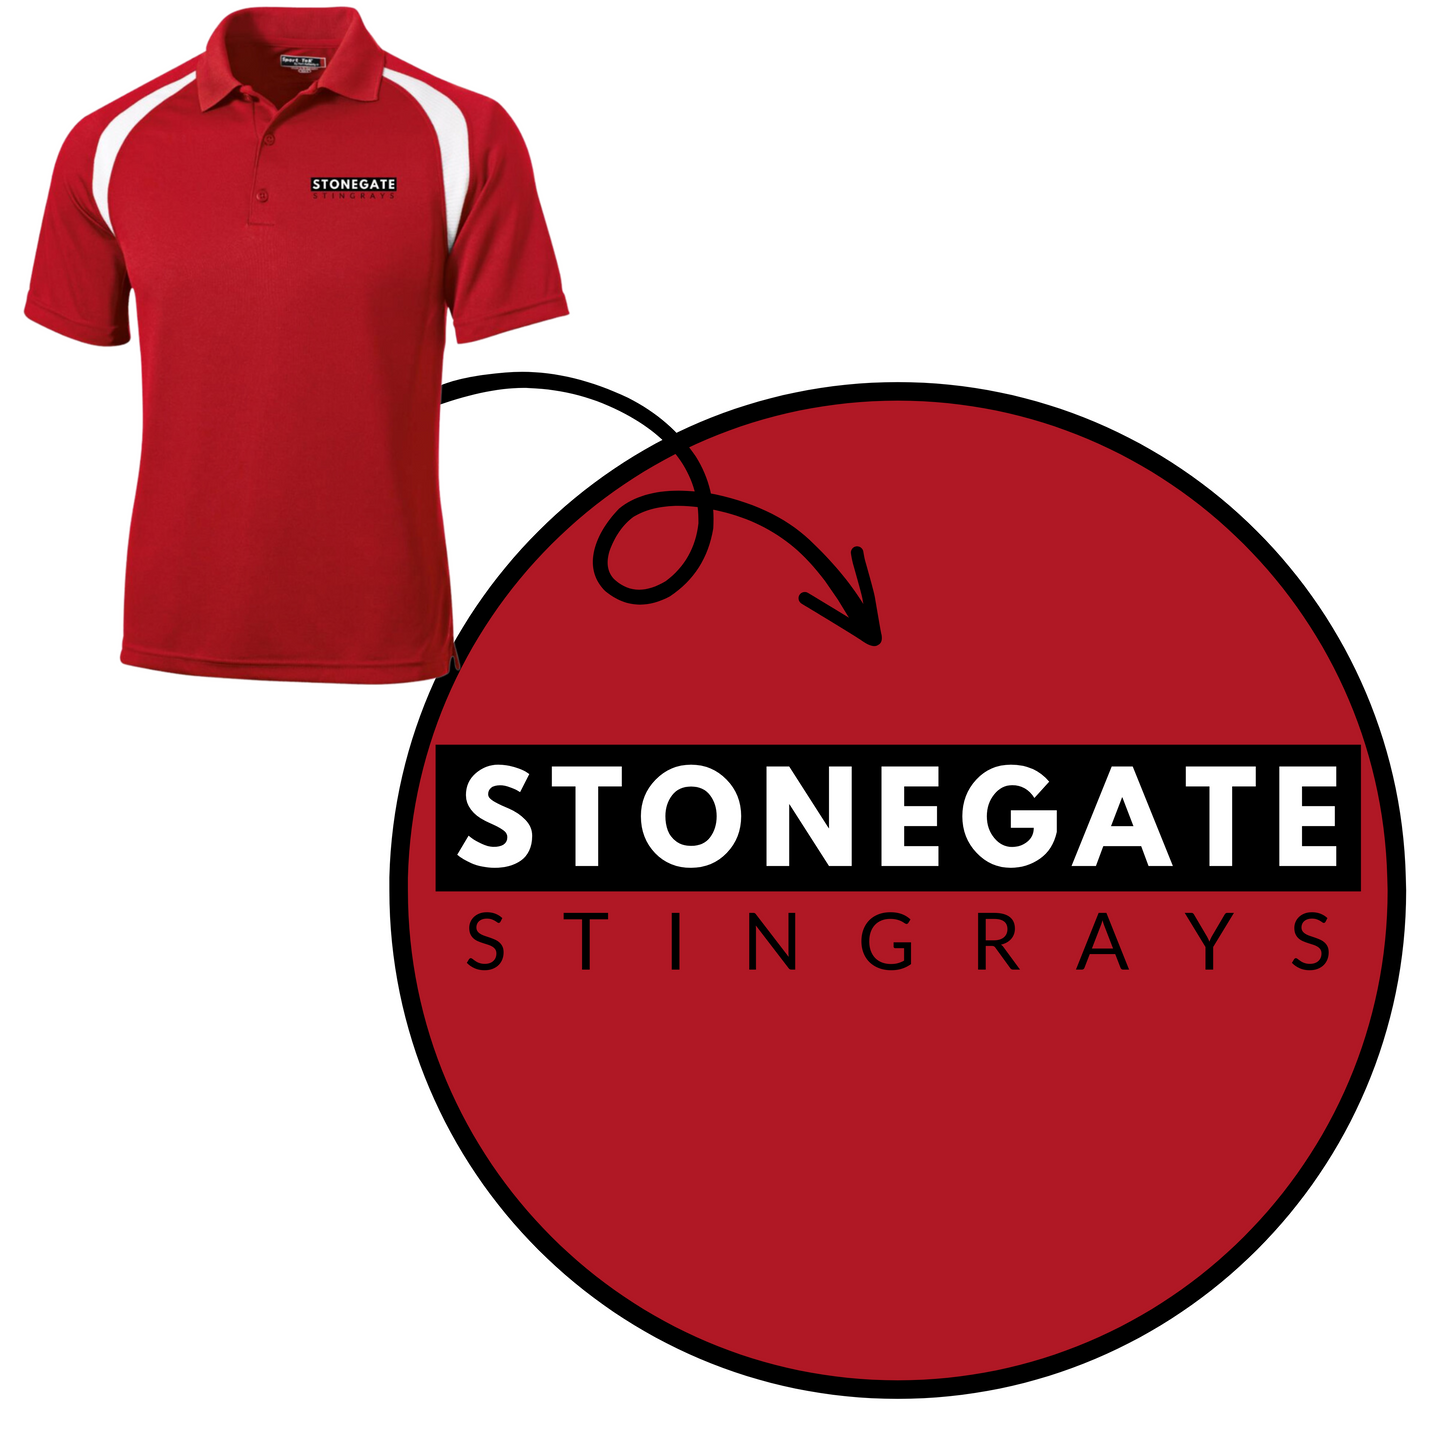 Stingray Classic Polo Shirt